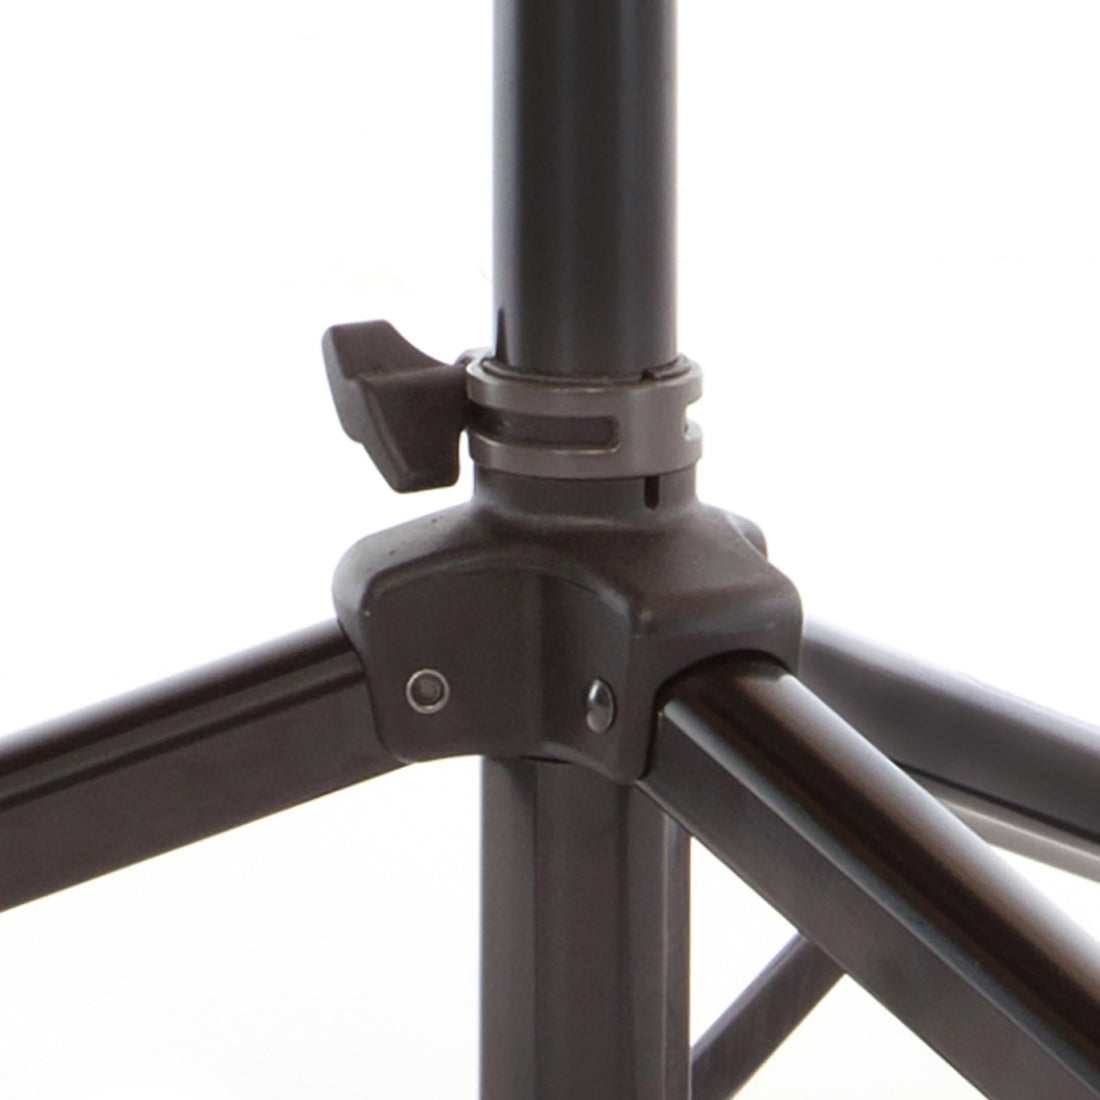 close up of a bike repair stand tripod leg fitting.